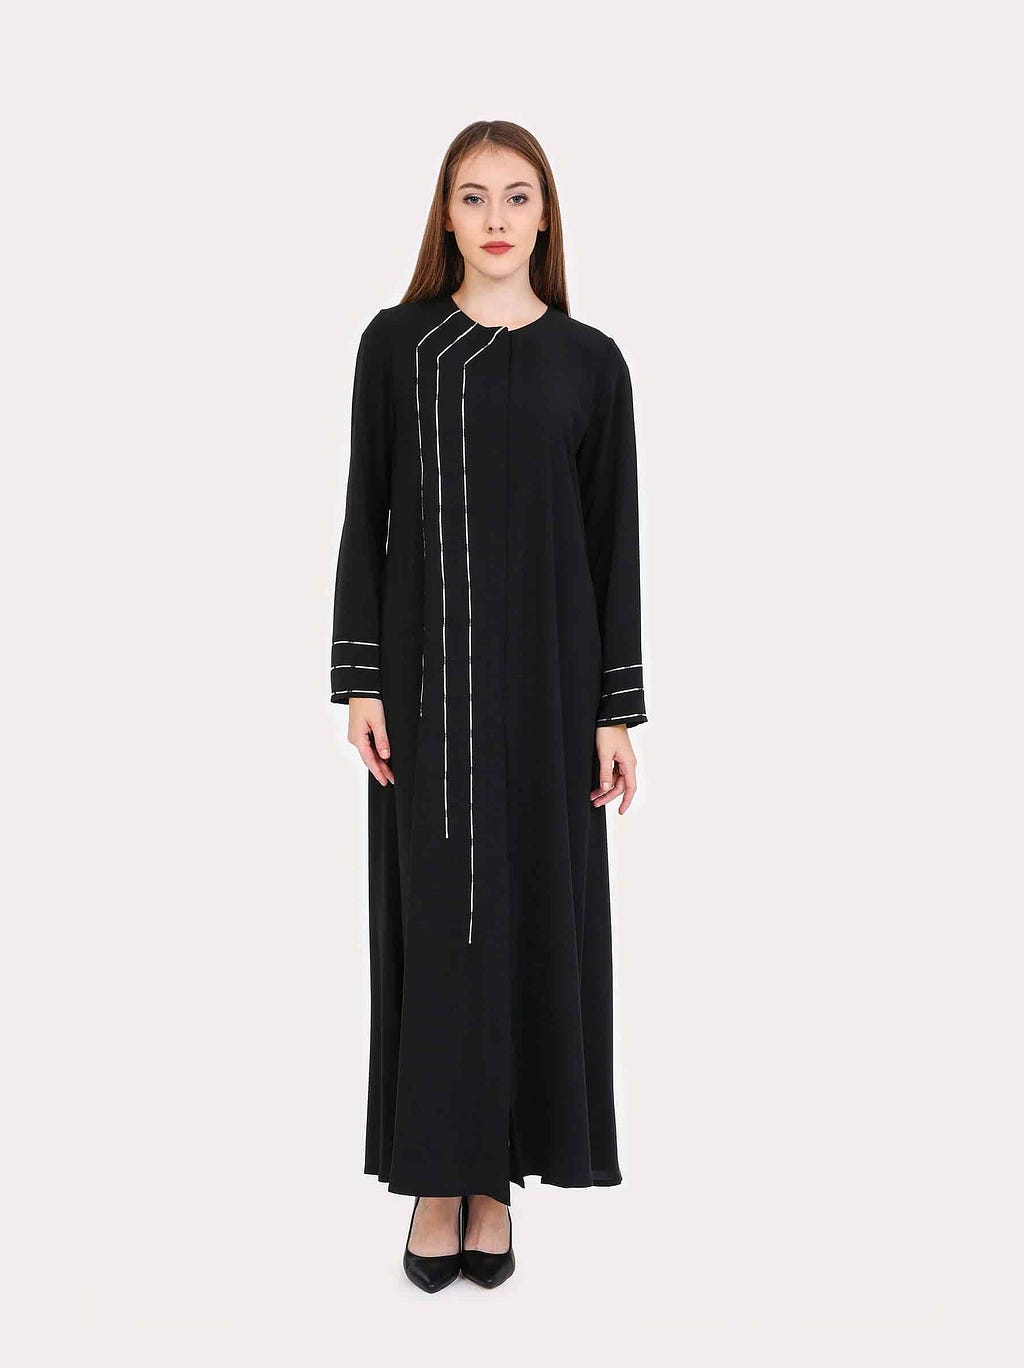 A lady with styling black abaya